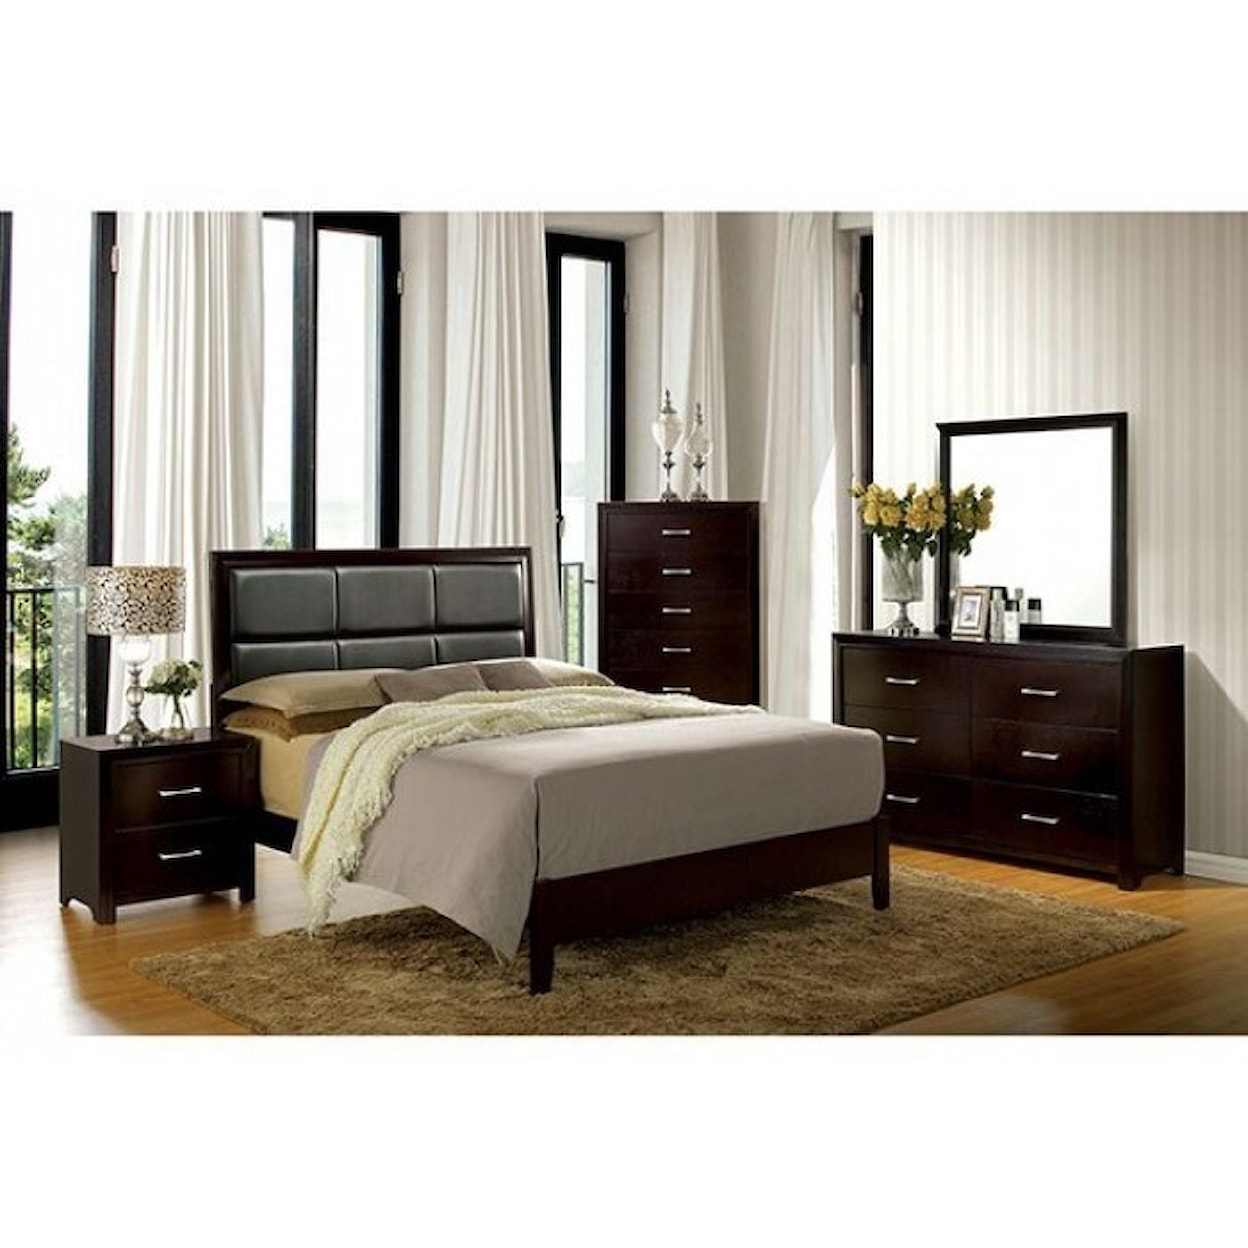 Furniture of America Janine California King Bed